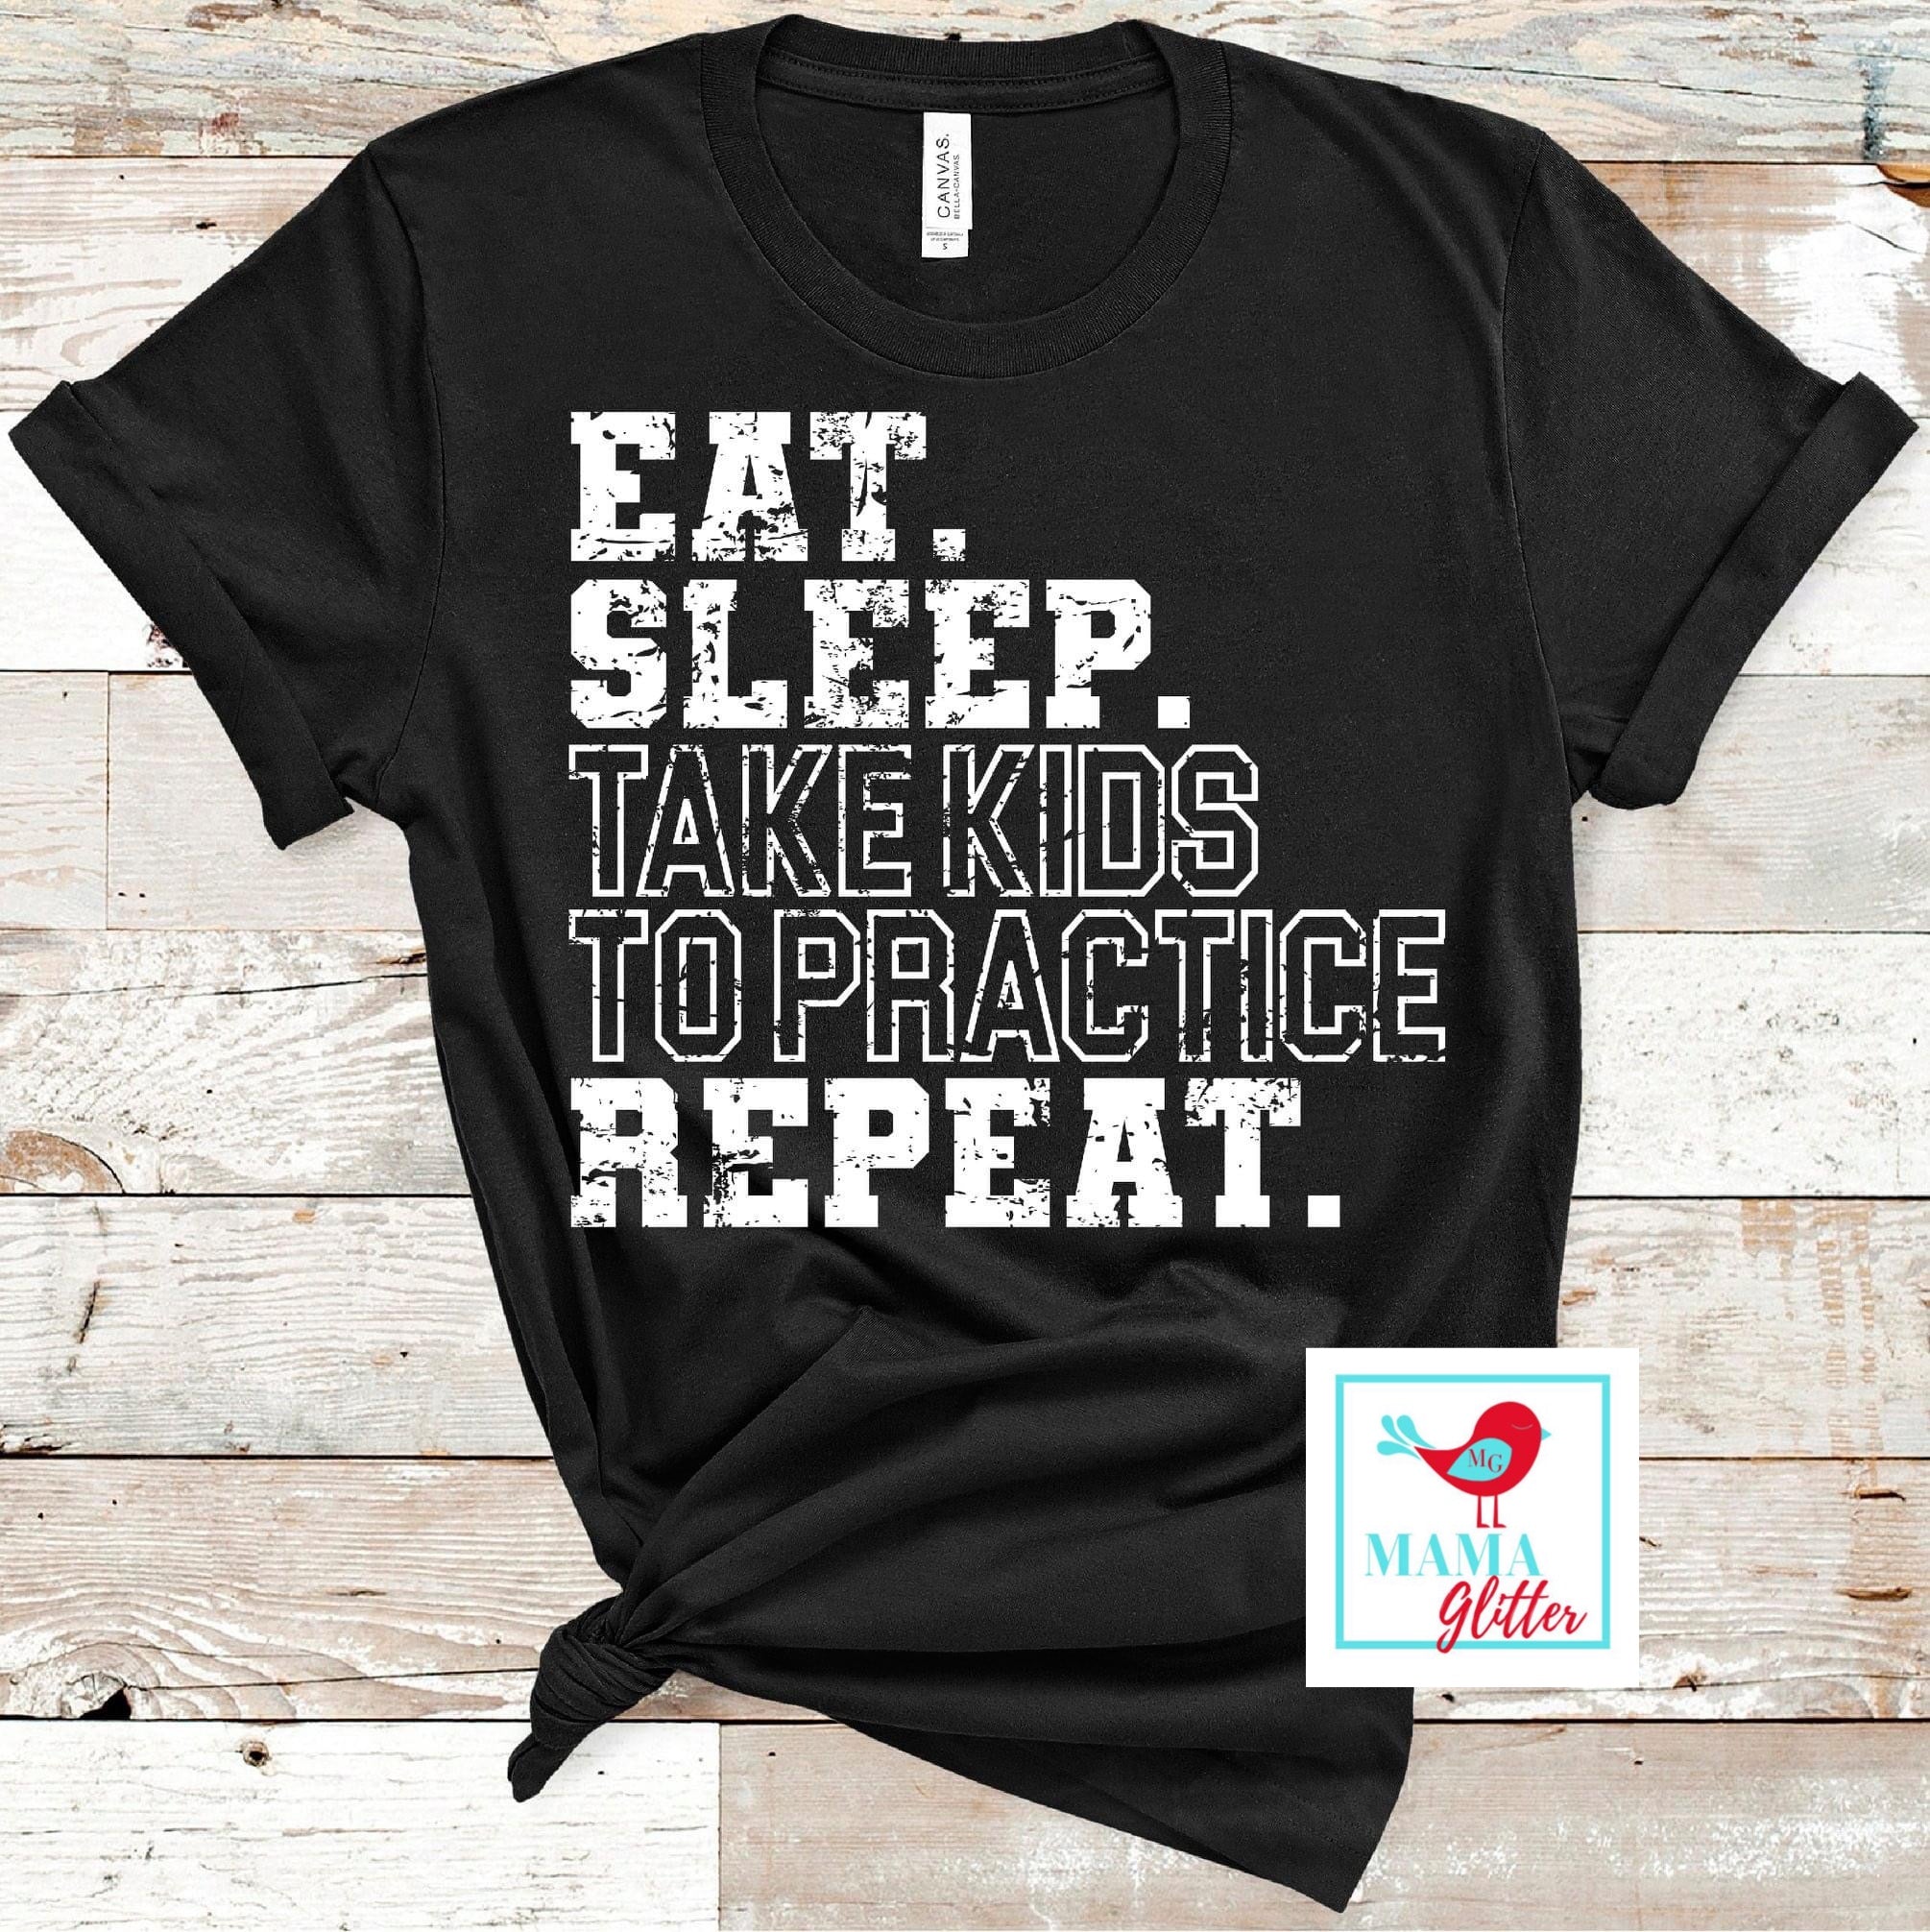 Eat, Sleep, Take Kids to Practice